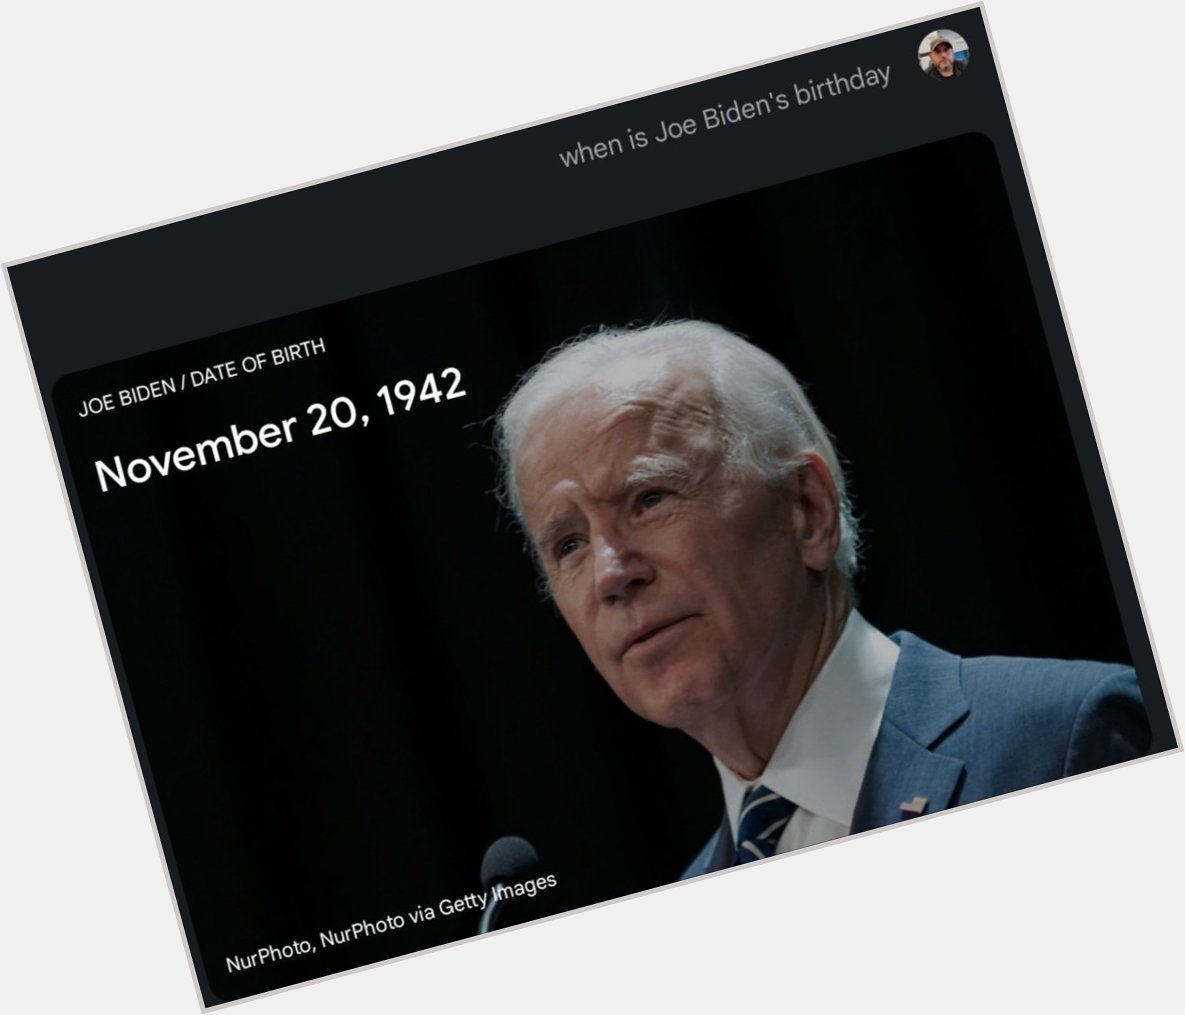  Happy birthday to Joe Biden 